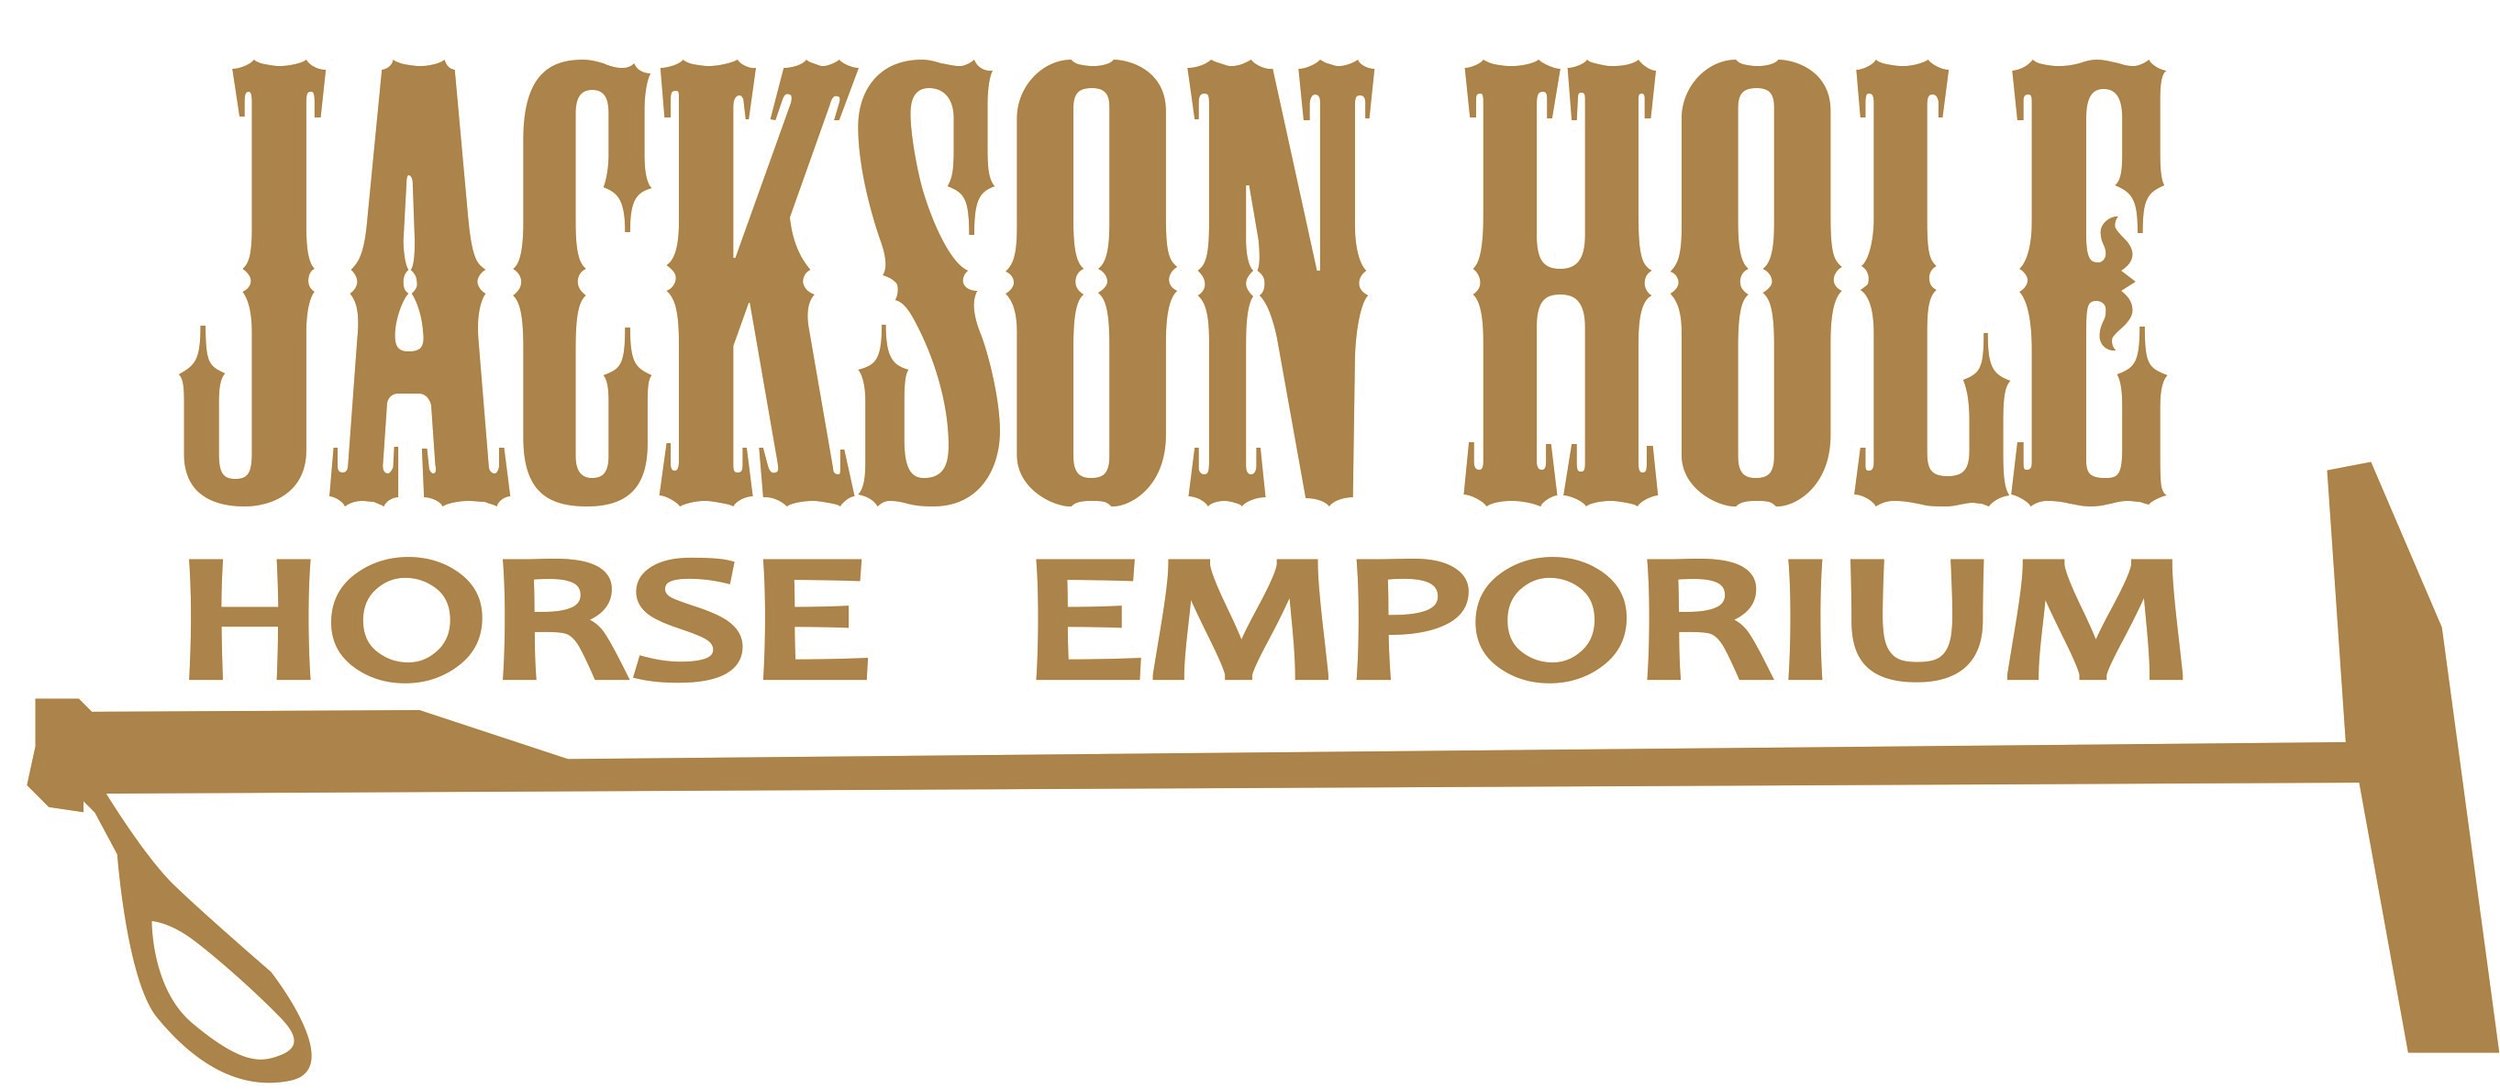 Jackson Hole Logo -  only lettering.jpg